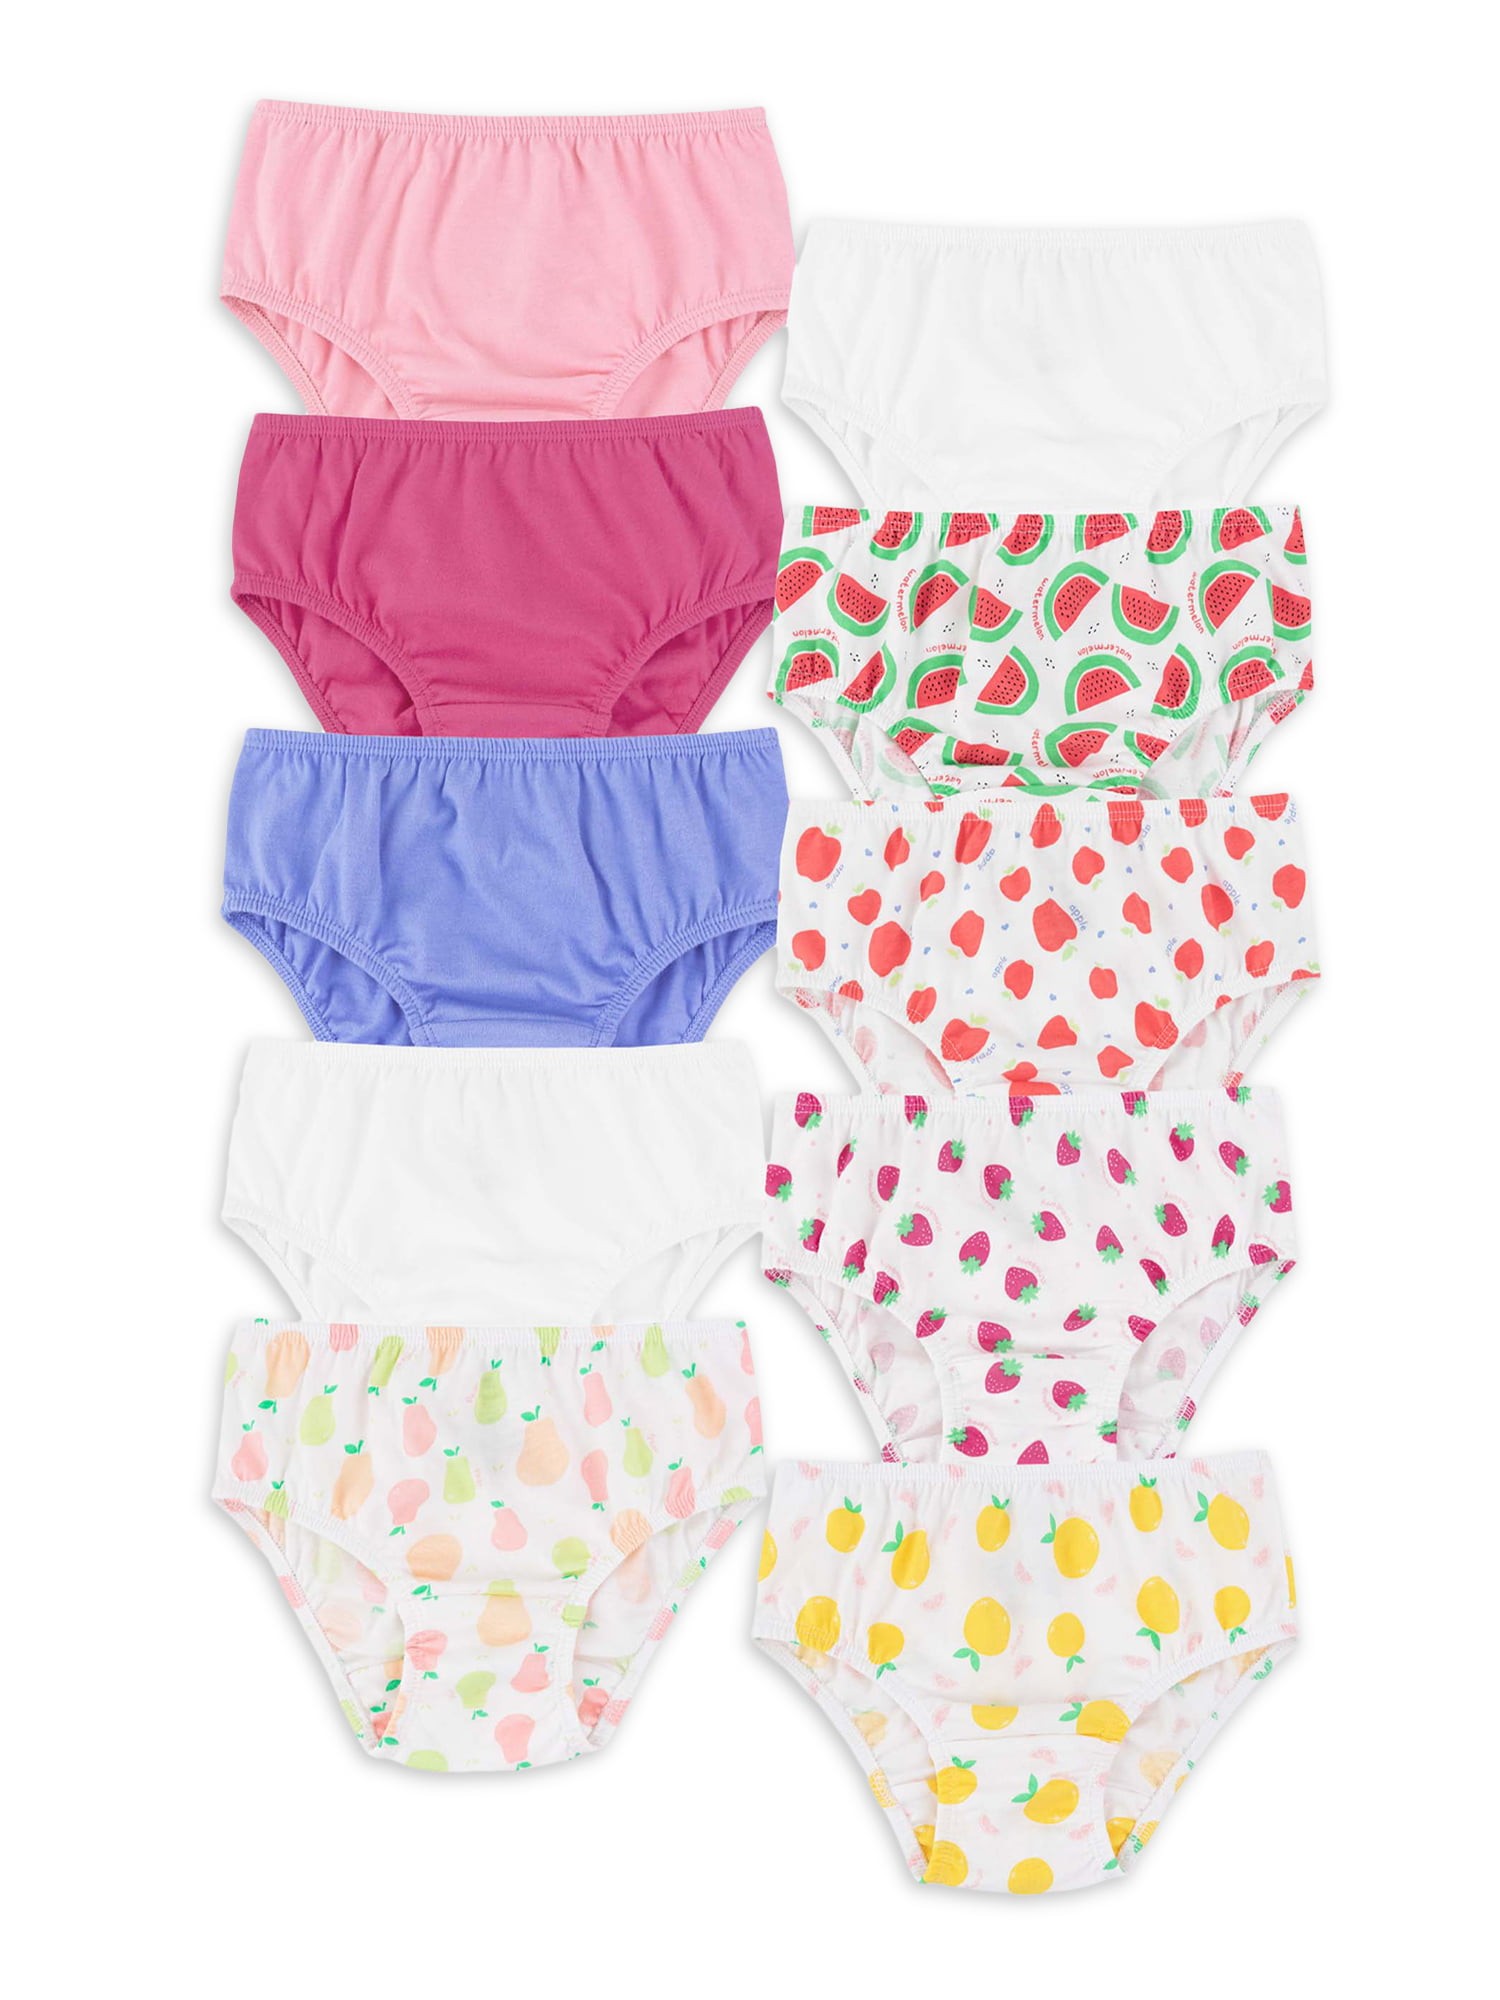 Cocomelon Toddler Girls' Underwear, 6 Pack Sizes 2T-4T - Walmart